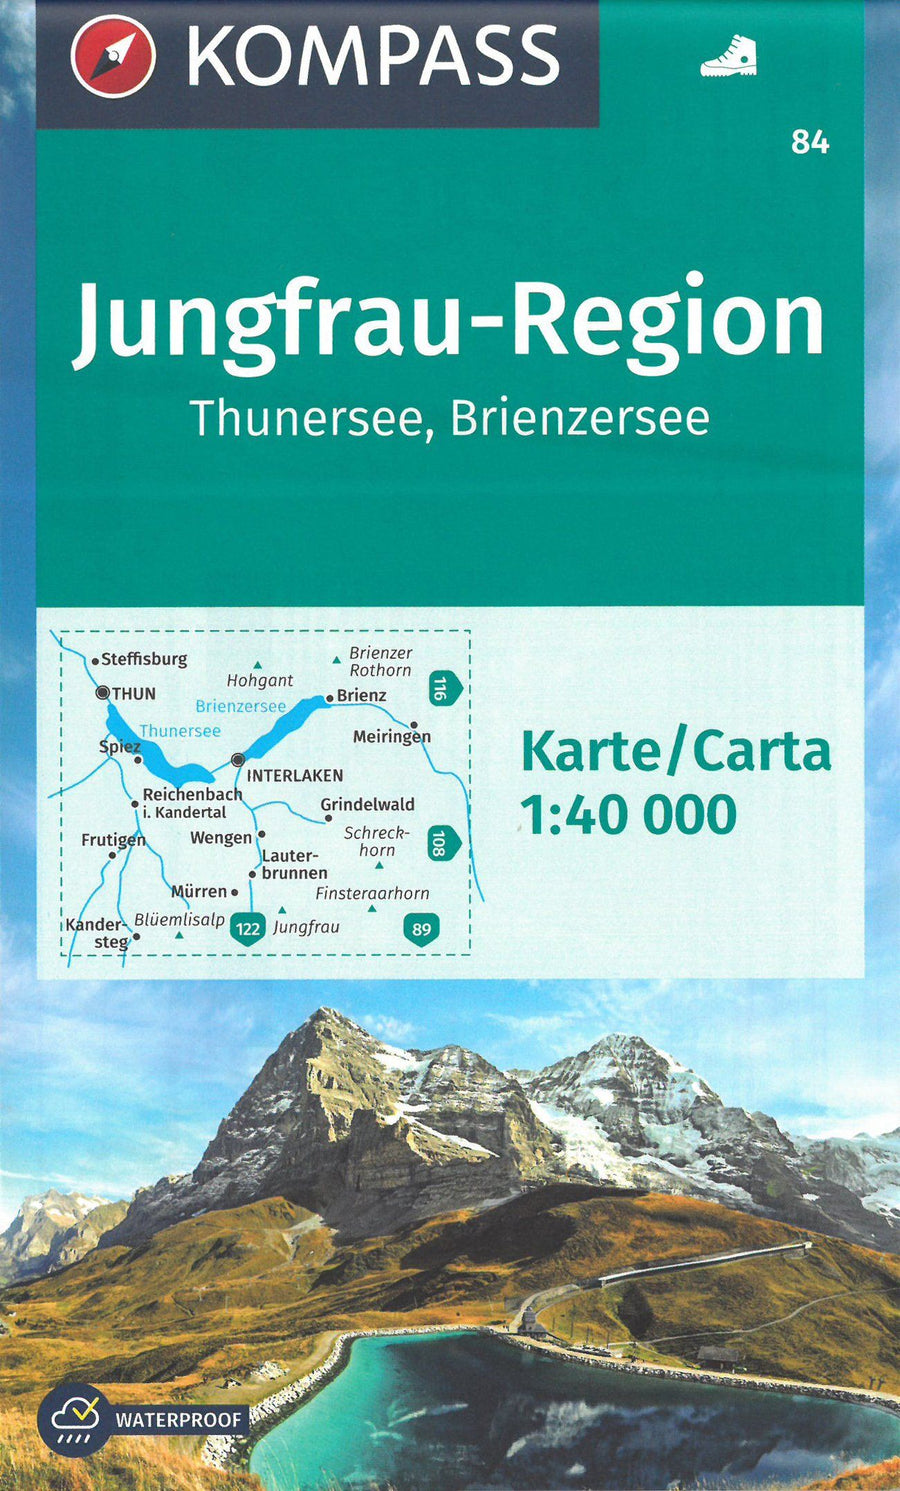 Carte de randonnée n° 84 - Jungfrau Region, Thunersee Brienzersee (Suisse) | Kompass carte pliée Kompass 